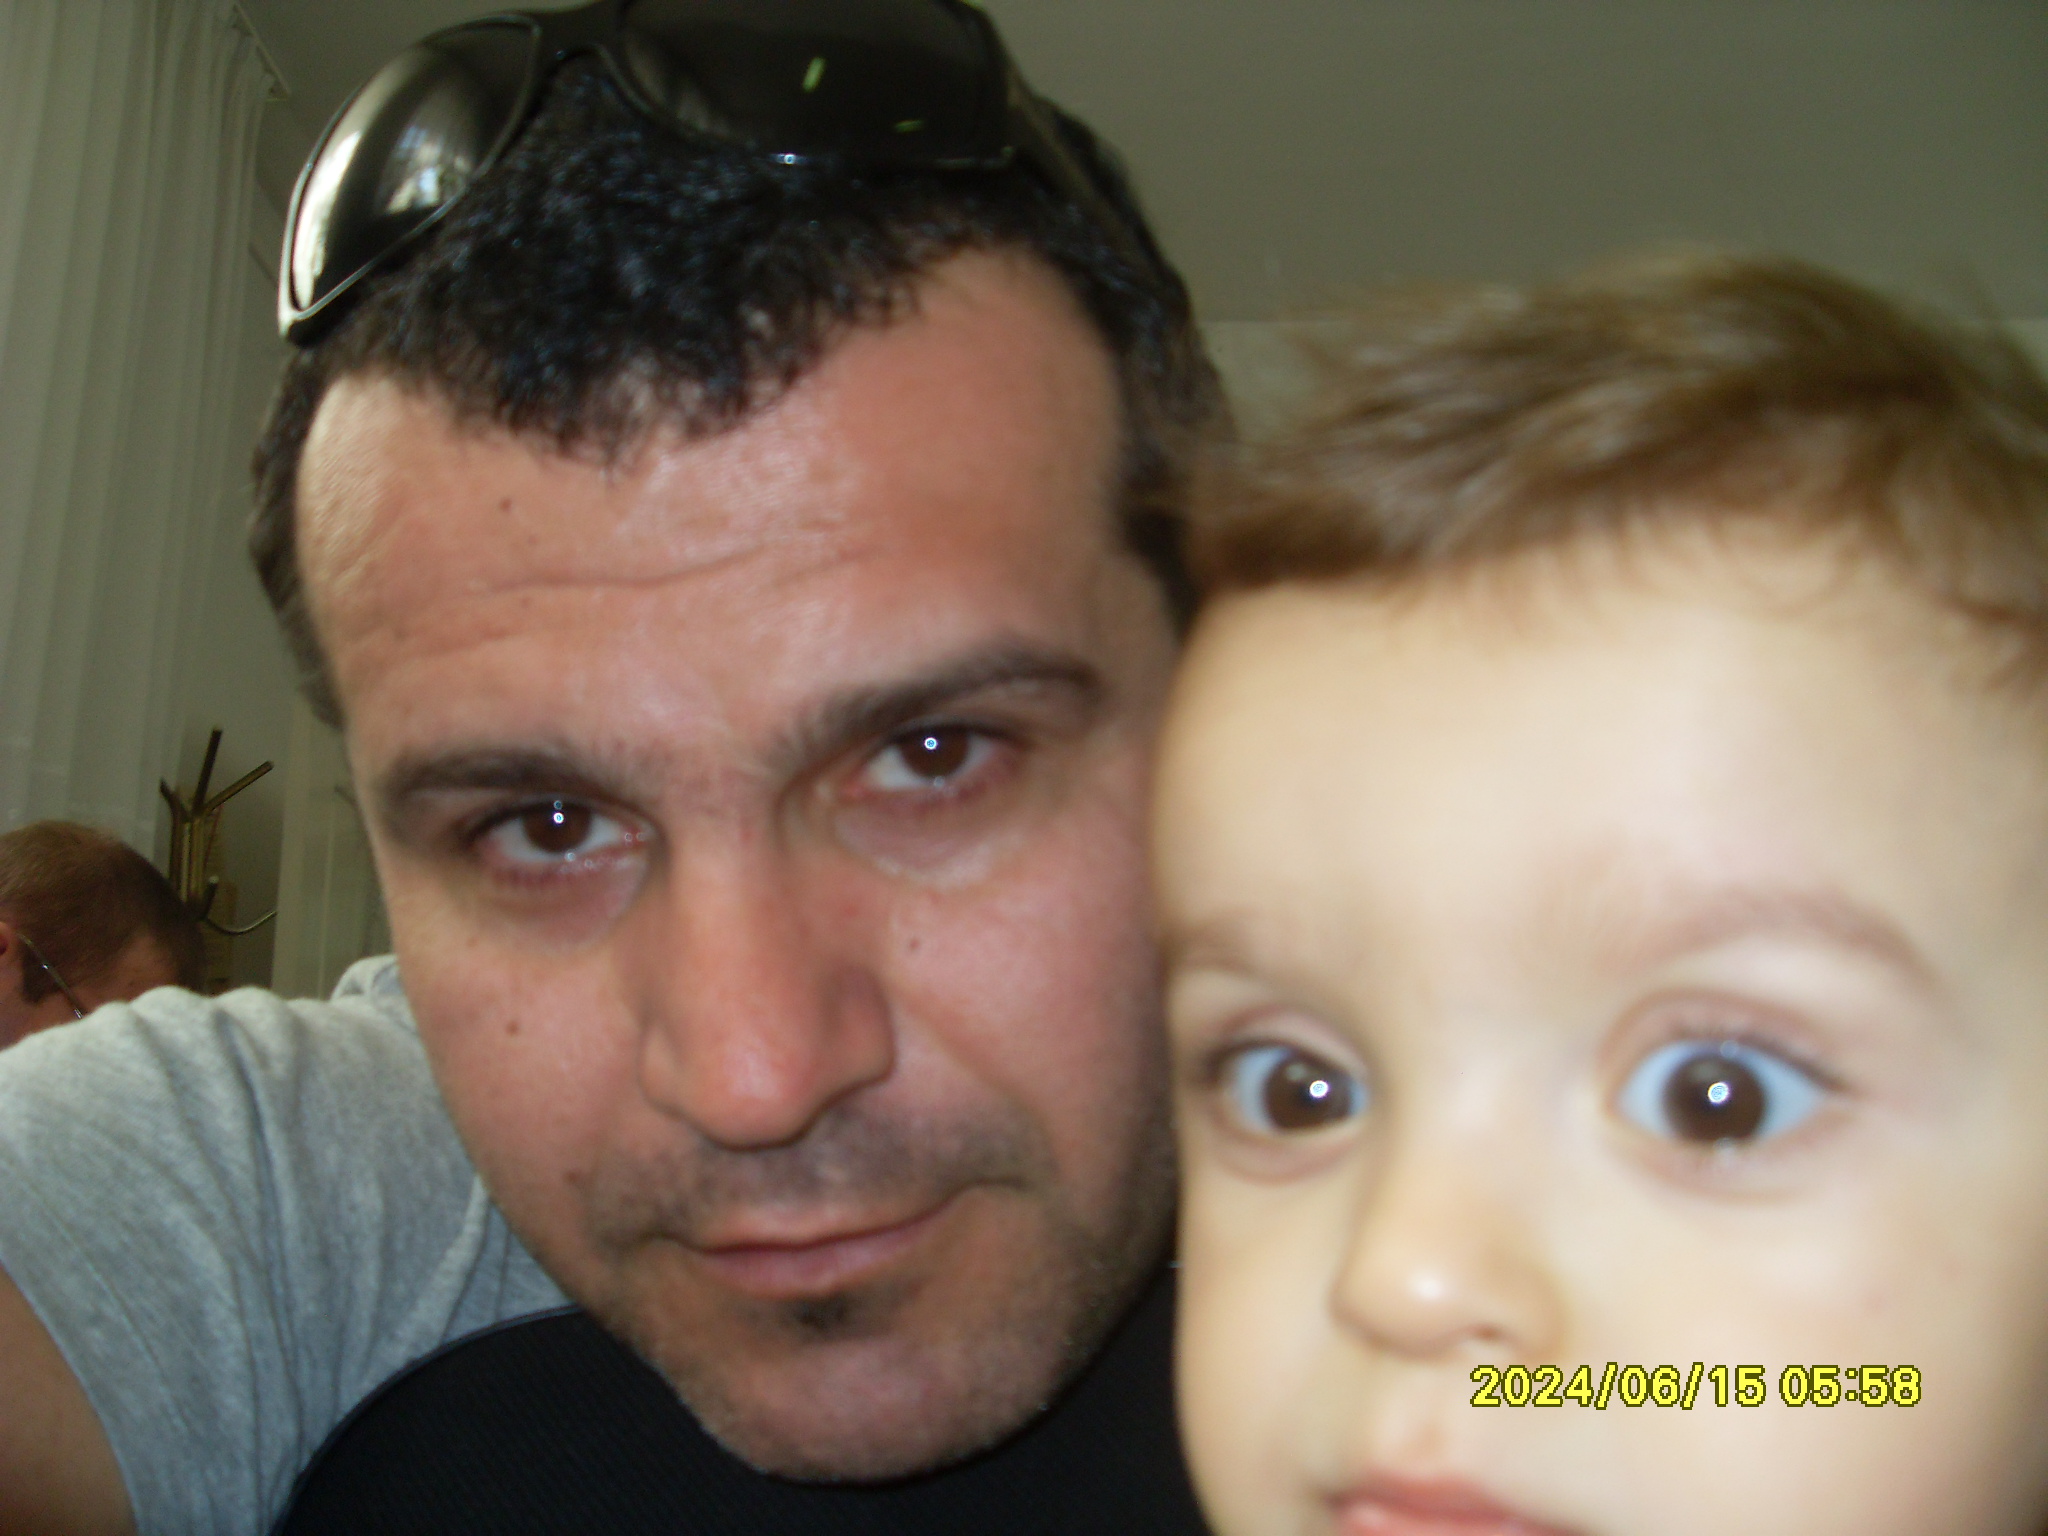 Panagiotis Laskos with father Dimitrios